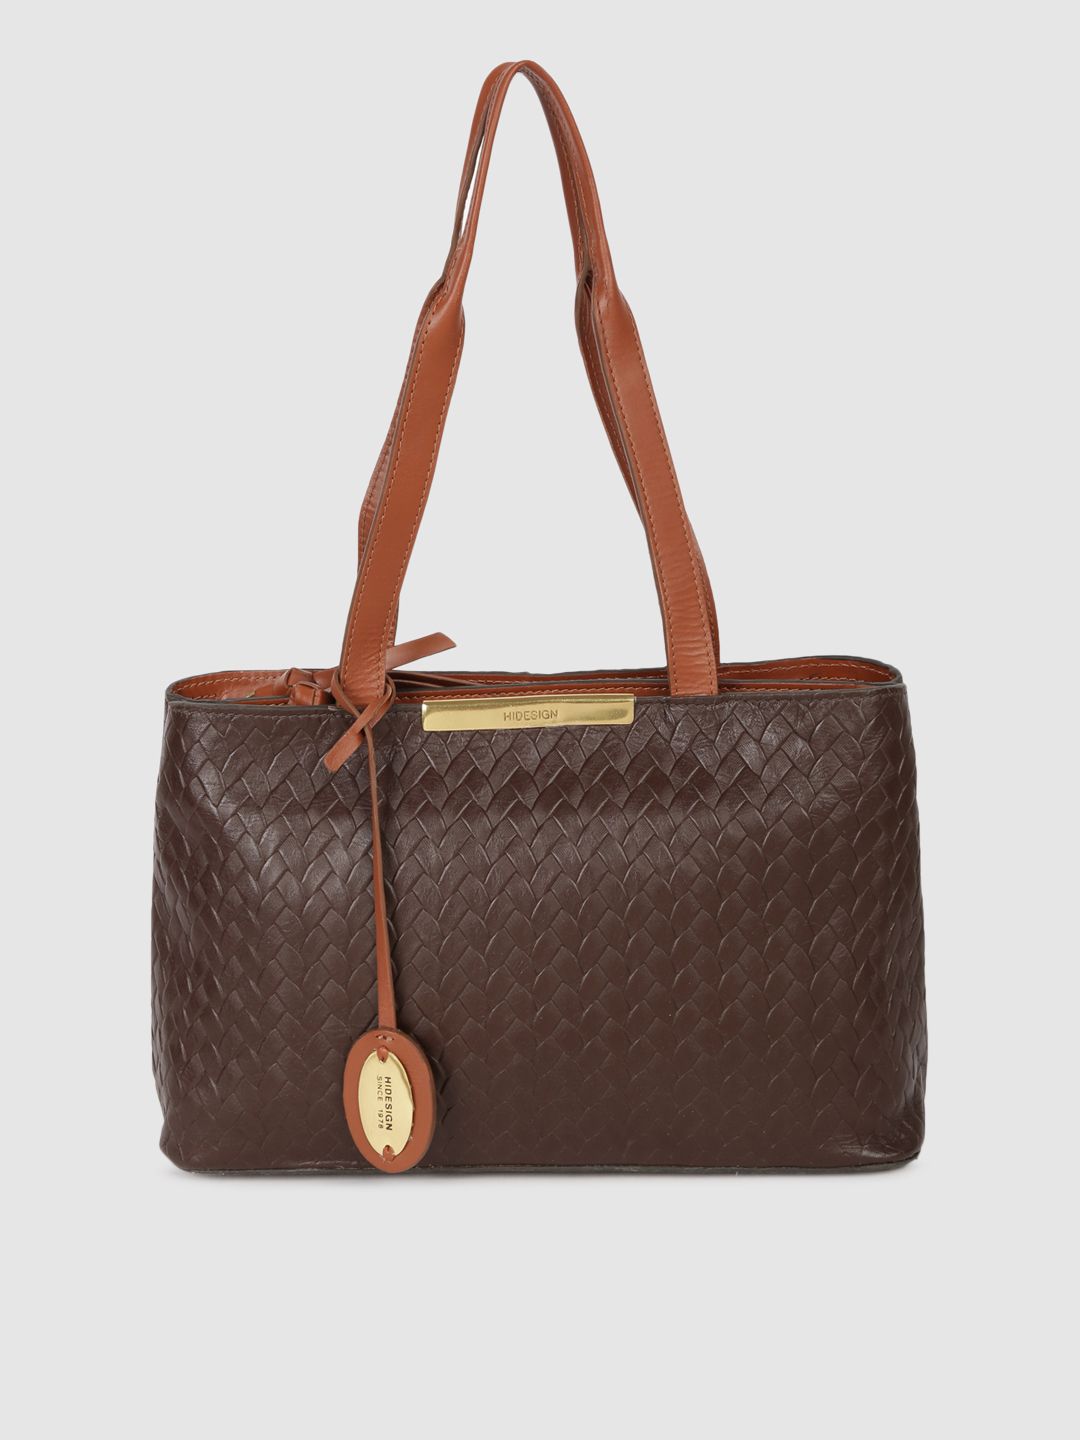 Hidesign Brown Textured Shoulder Bag Price in India